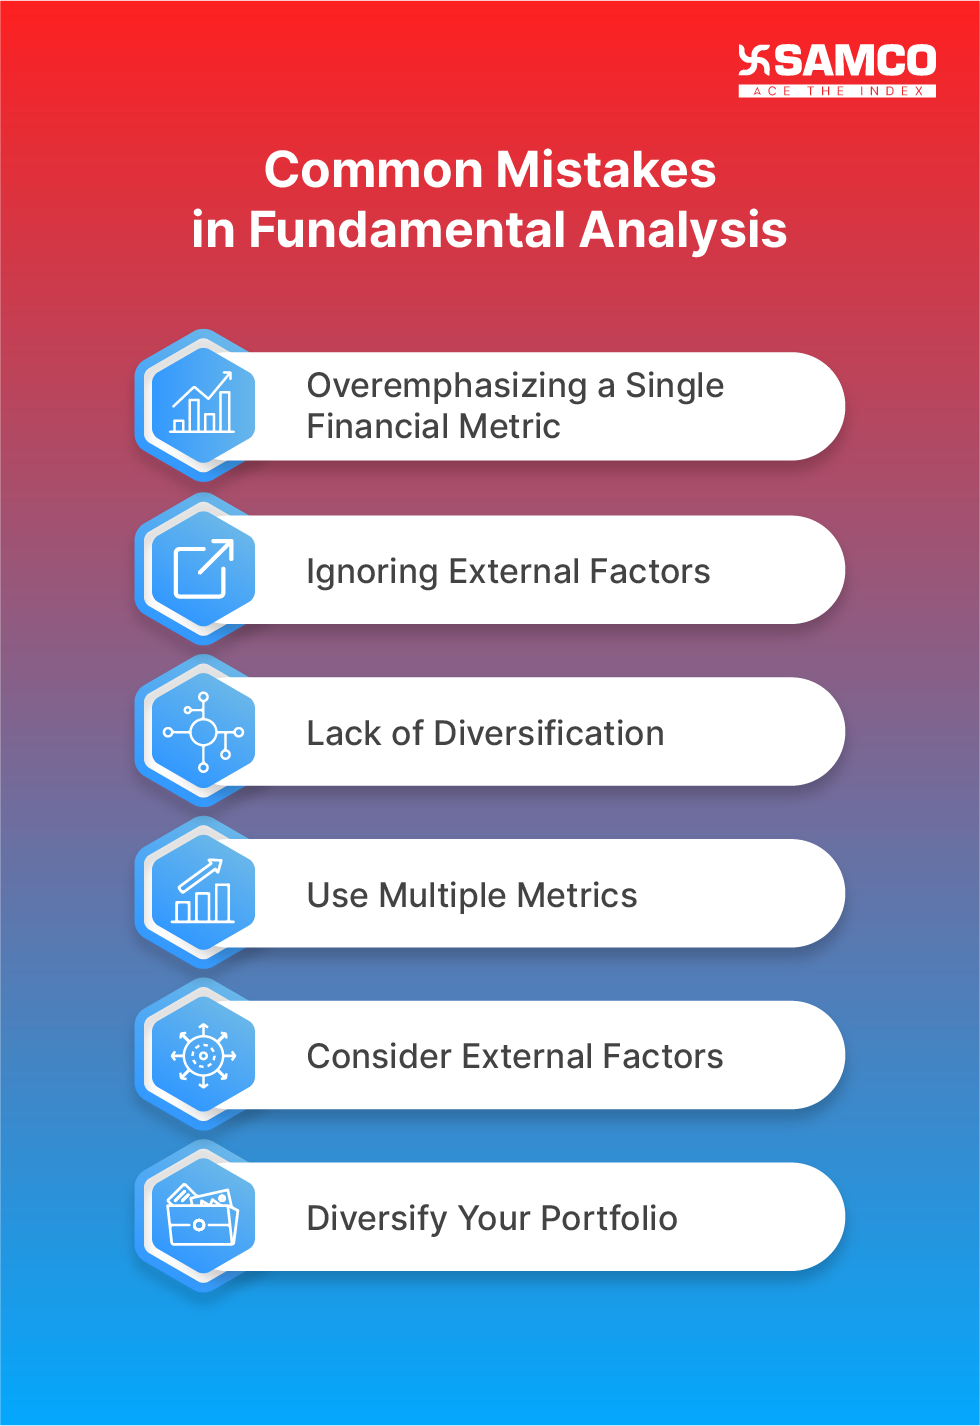 Investing Basics: Fundamental Analysis